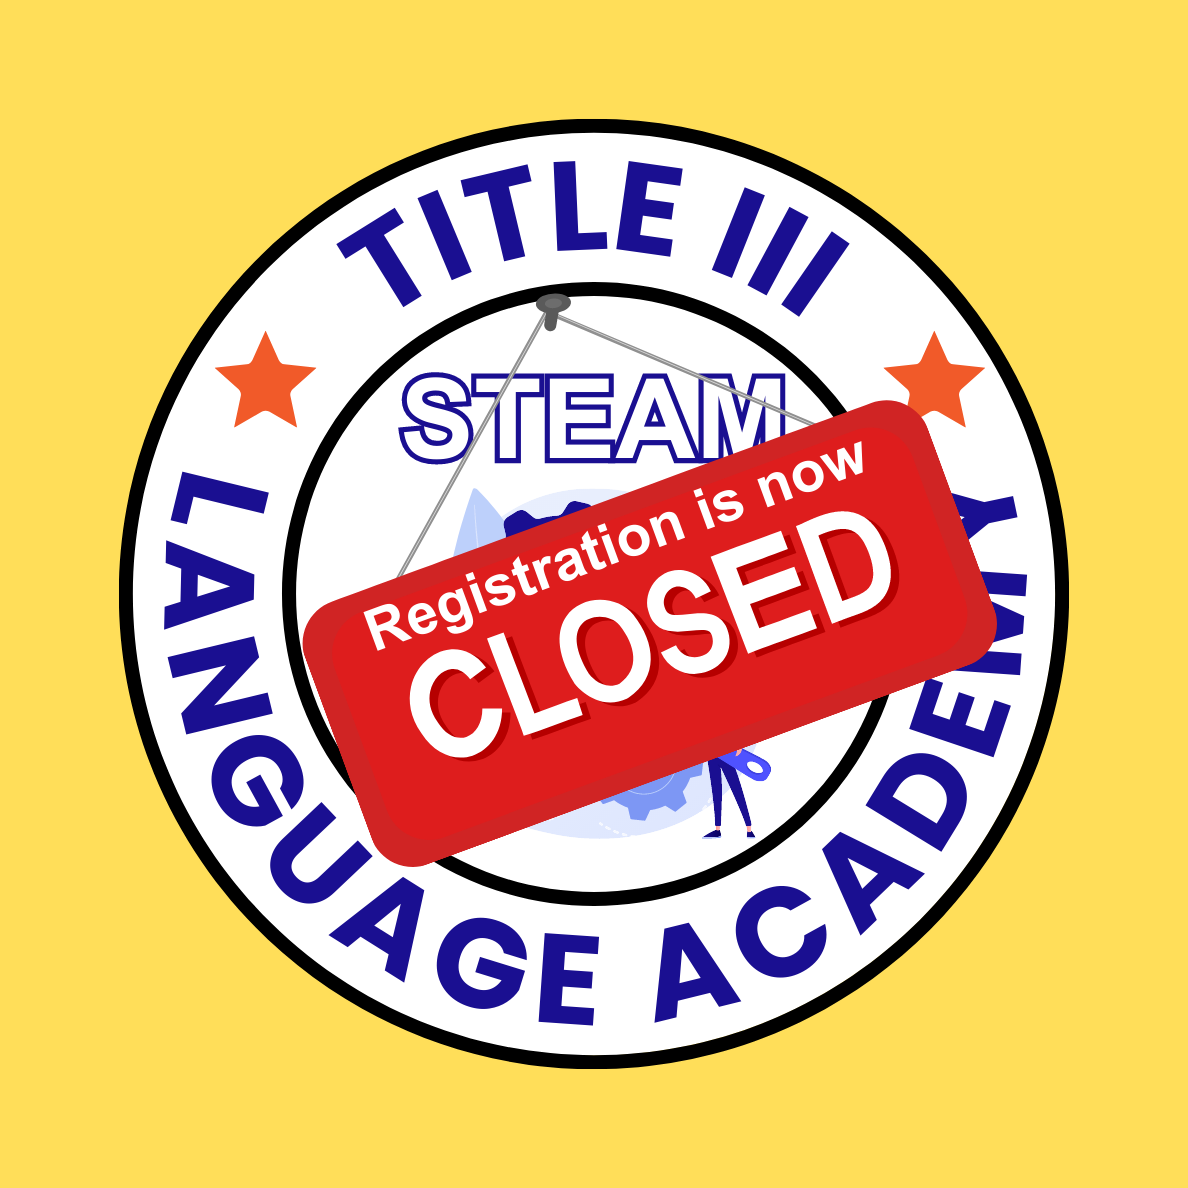 Title III Steam Academy Closed logo